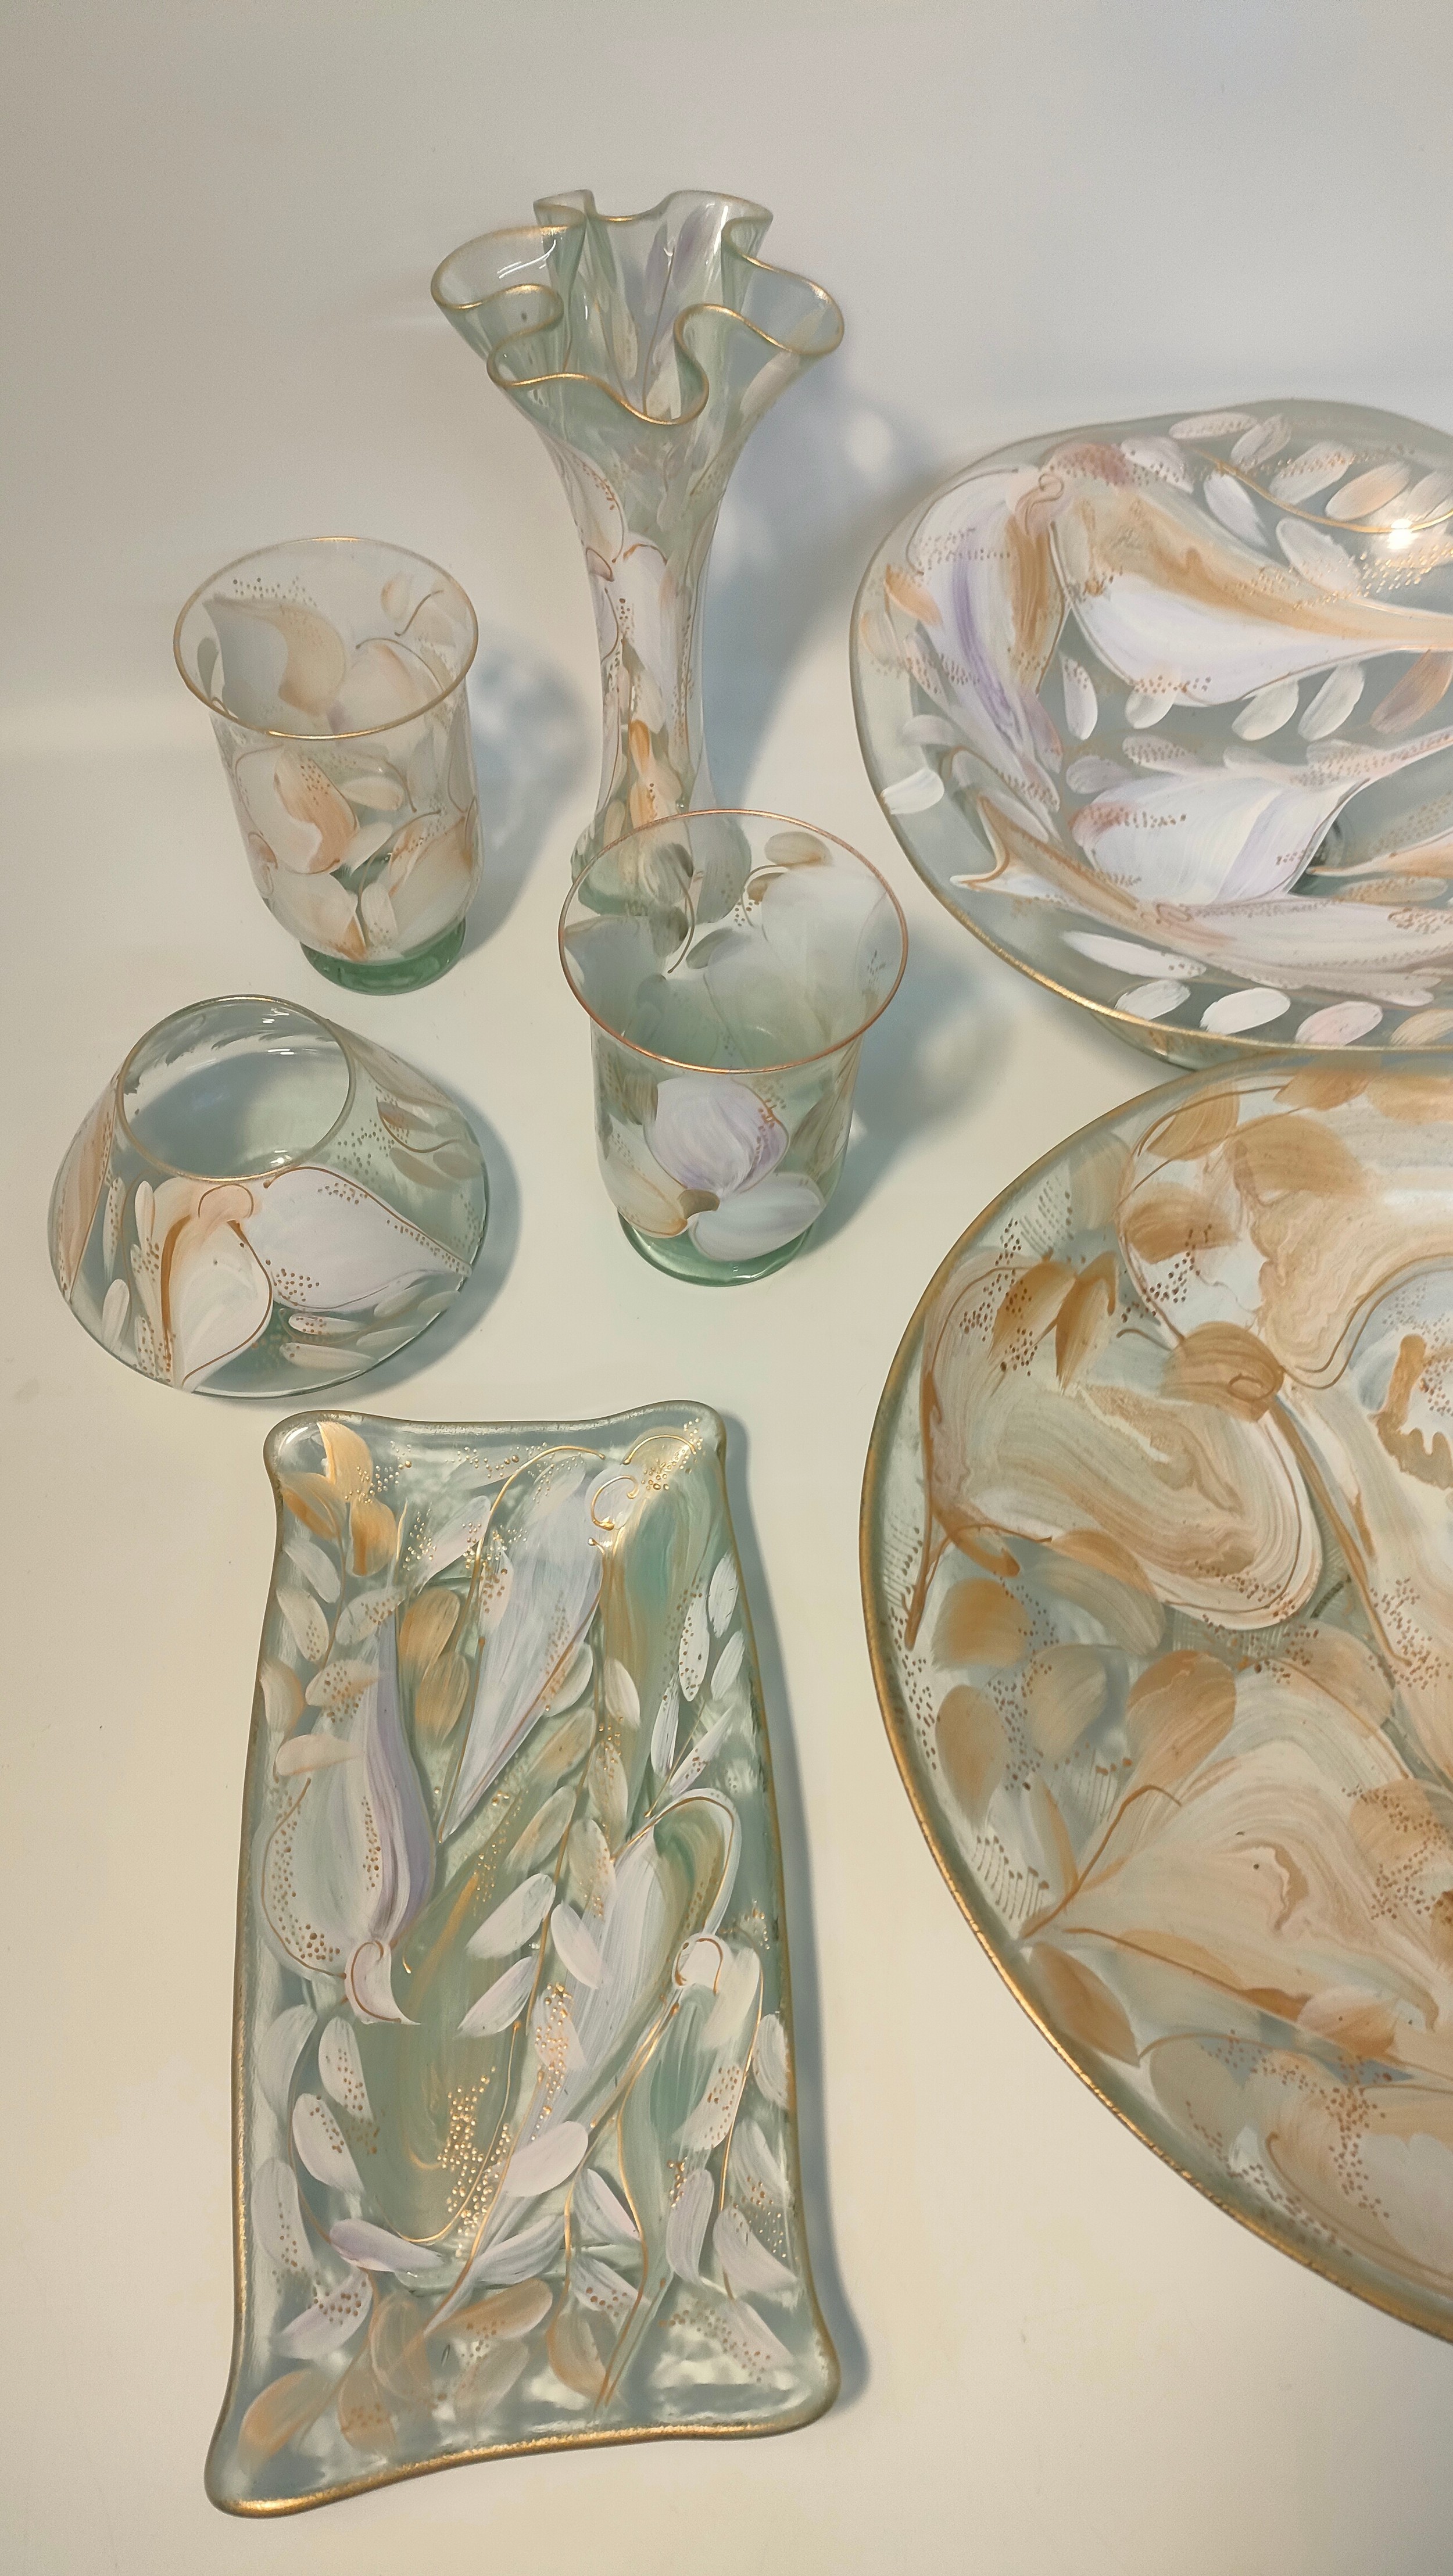 Italian style hand painted art glass set; Large bowl, tazza & vases - Image 4 of 4